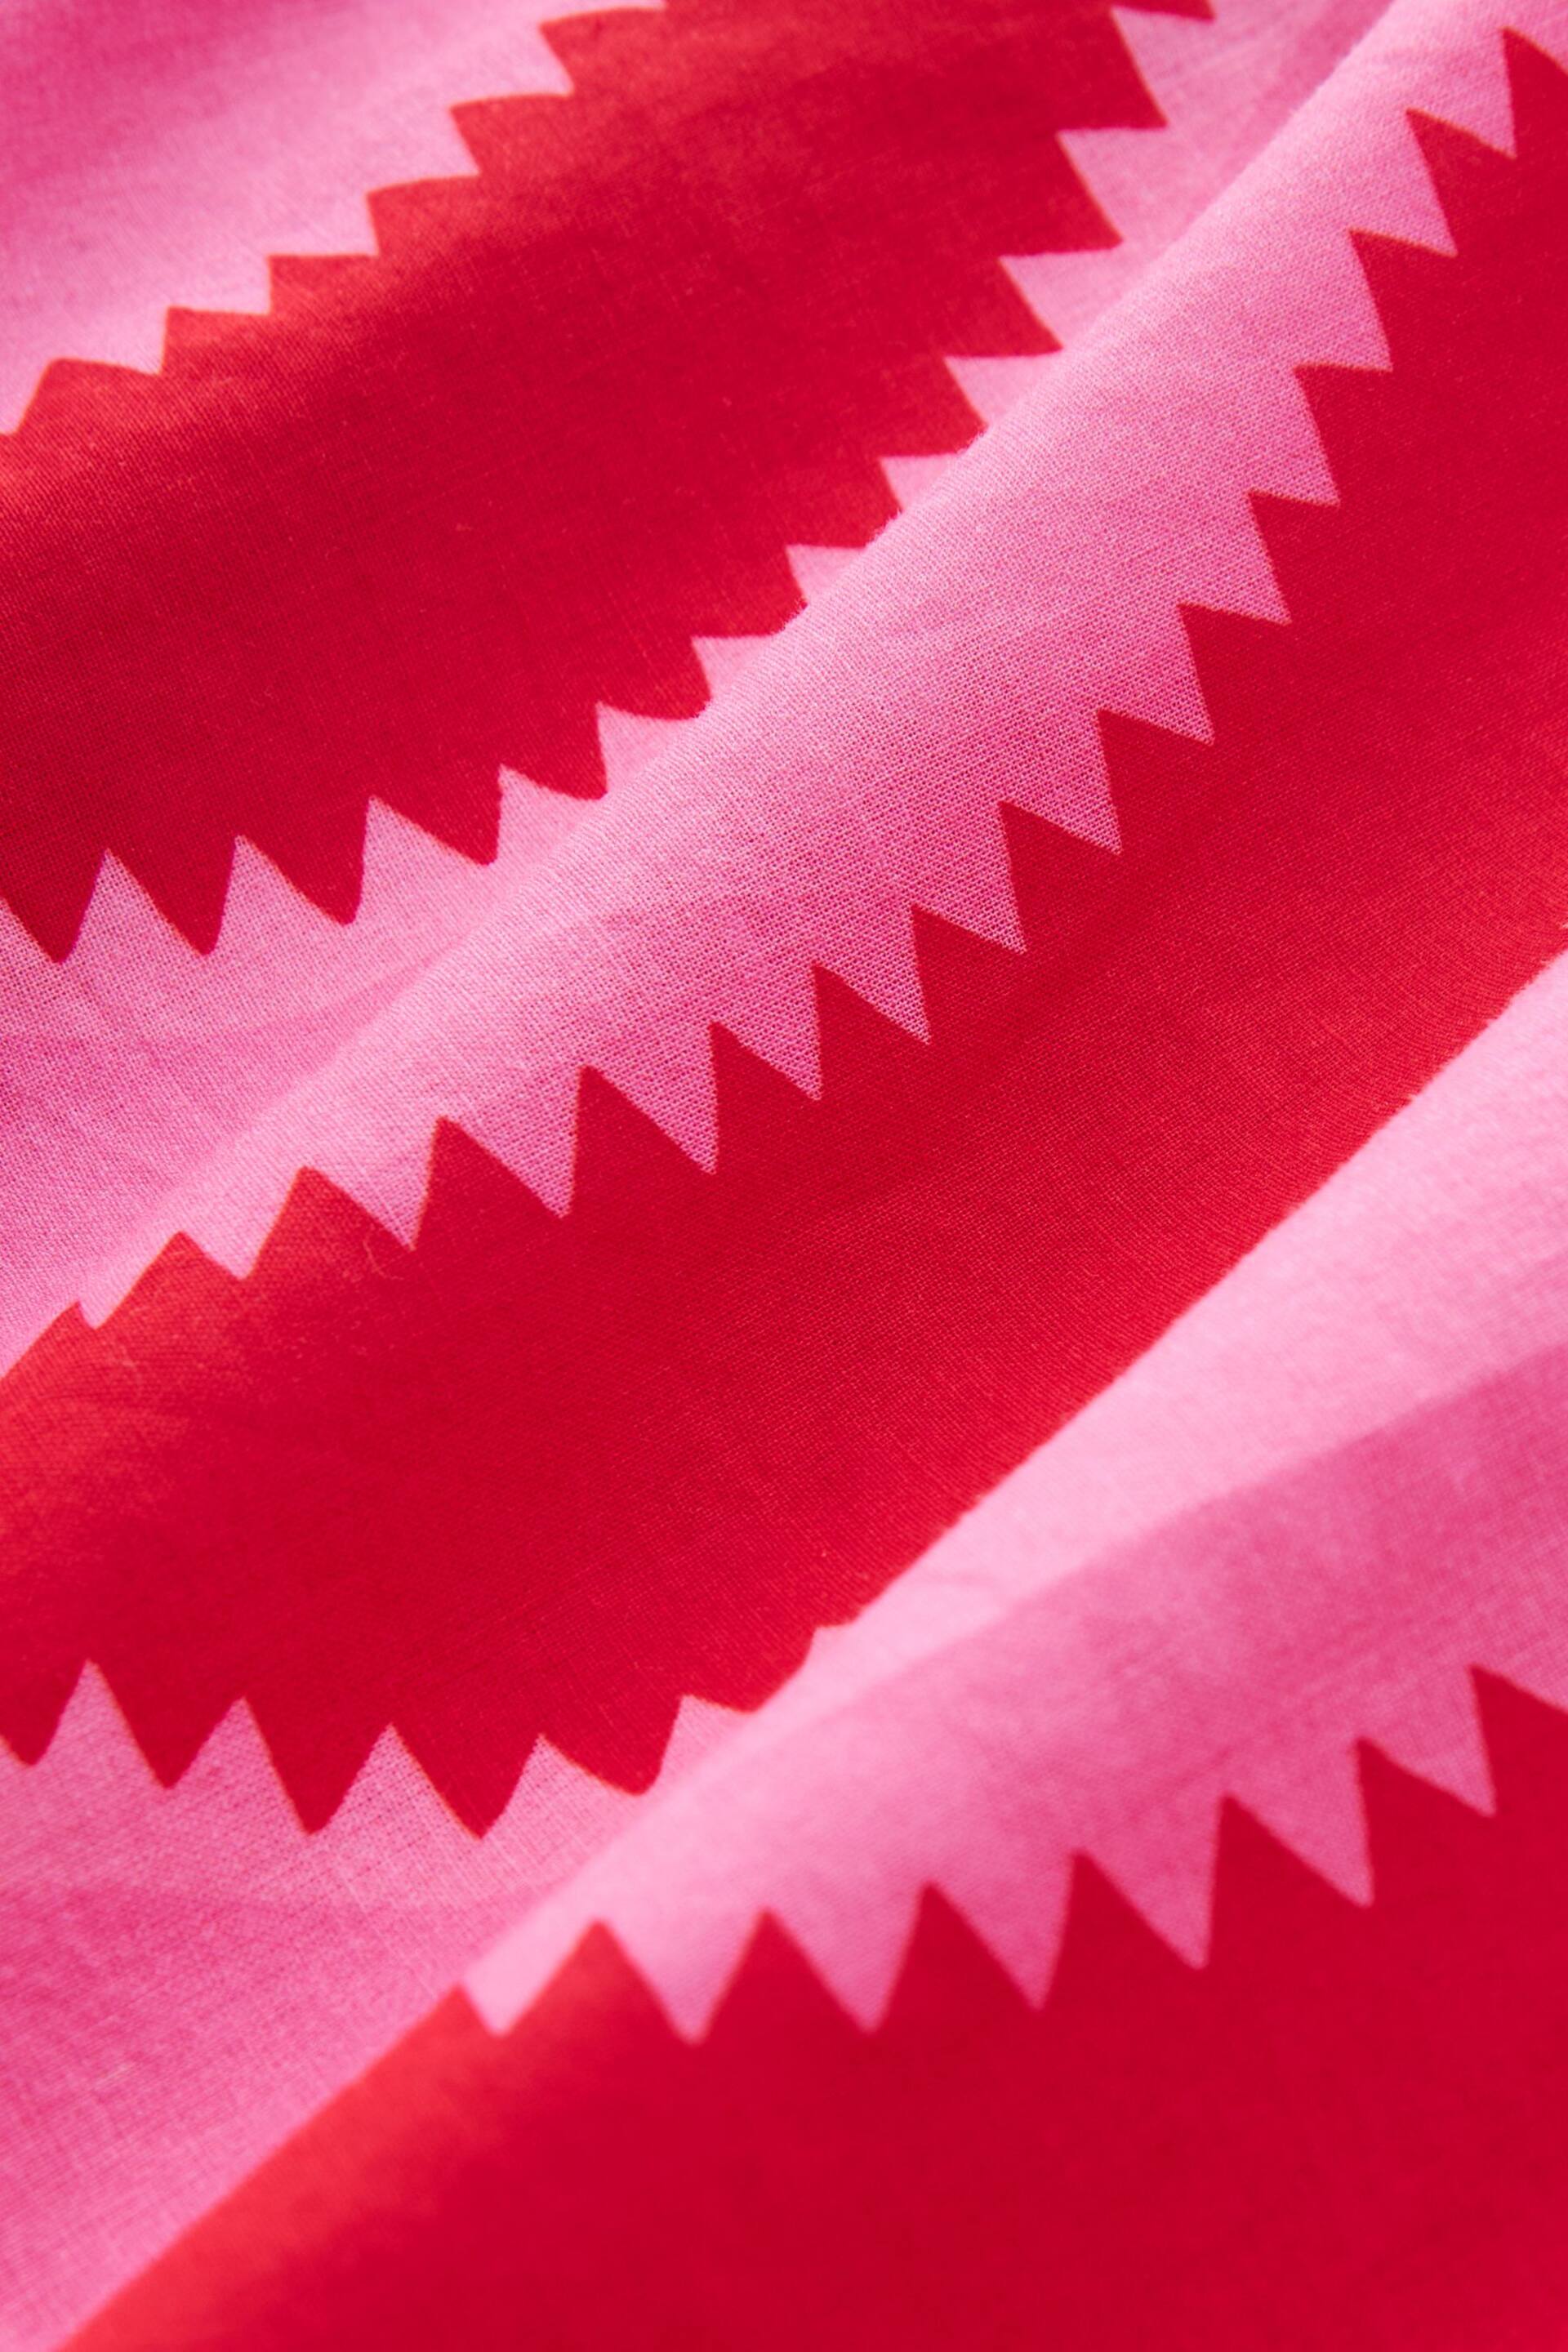 Cath Kidston Pink/Red Swirl Print Kaftan Dress - Image 5 of 6